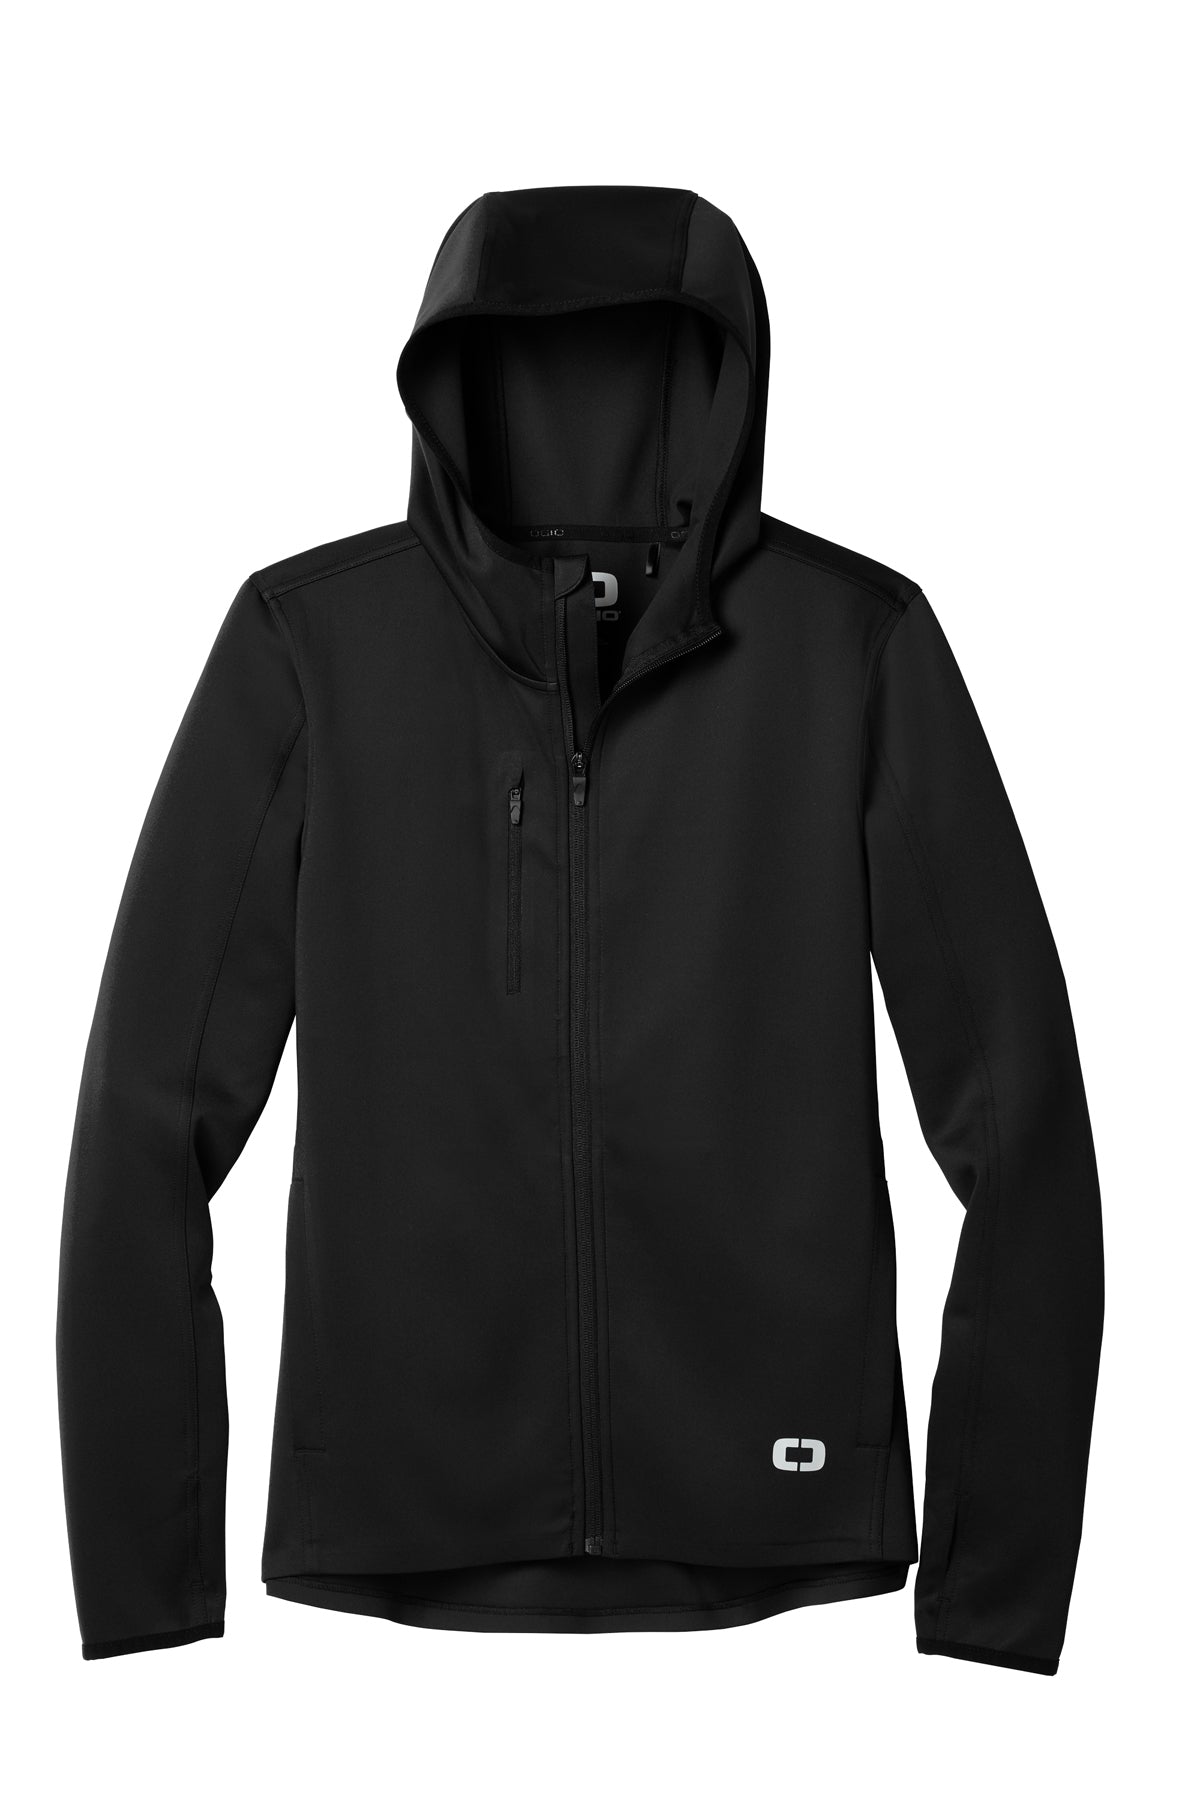 OGIO ® Stealth Full-Zip Jacket oe728